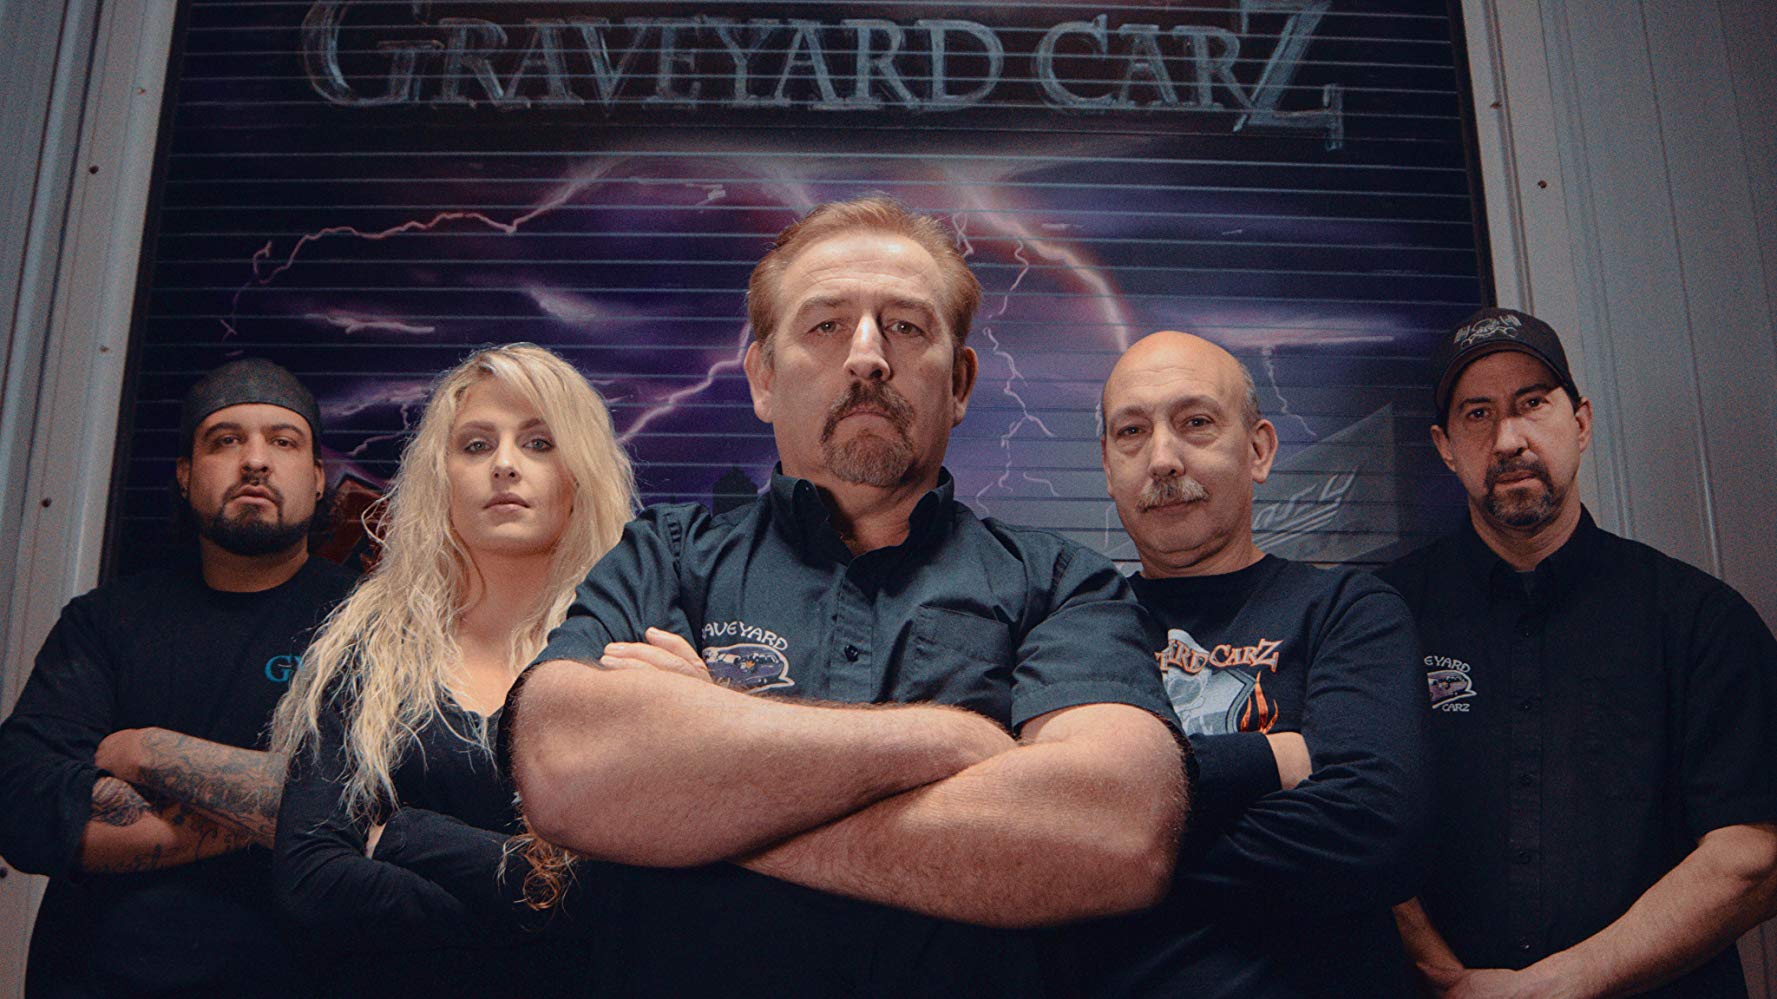 Watch Graveyard Carz - Season 2